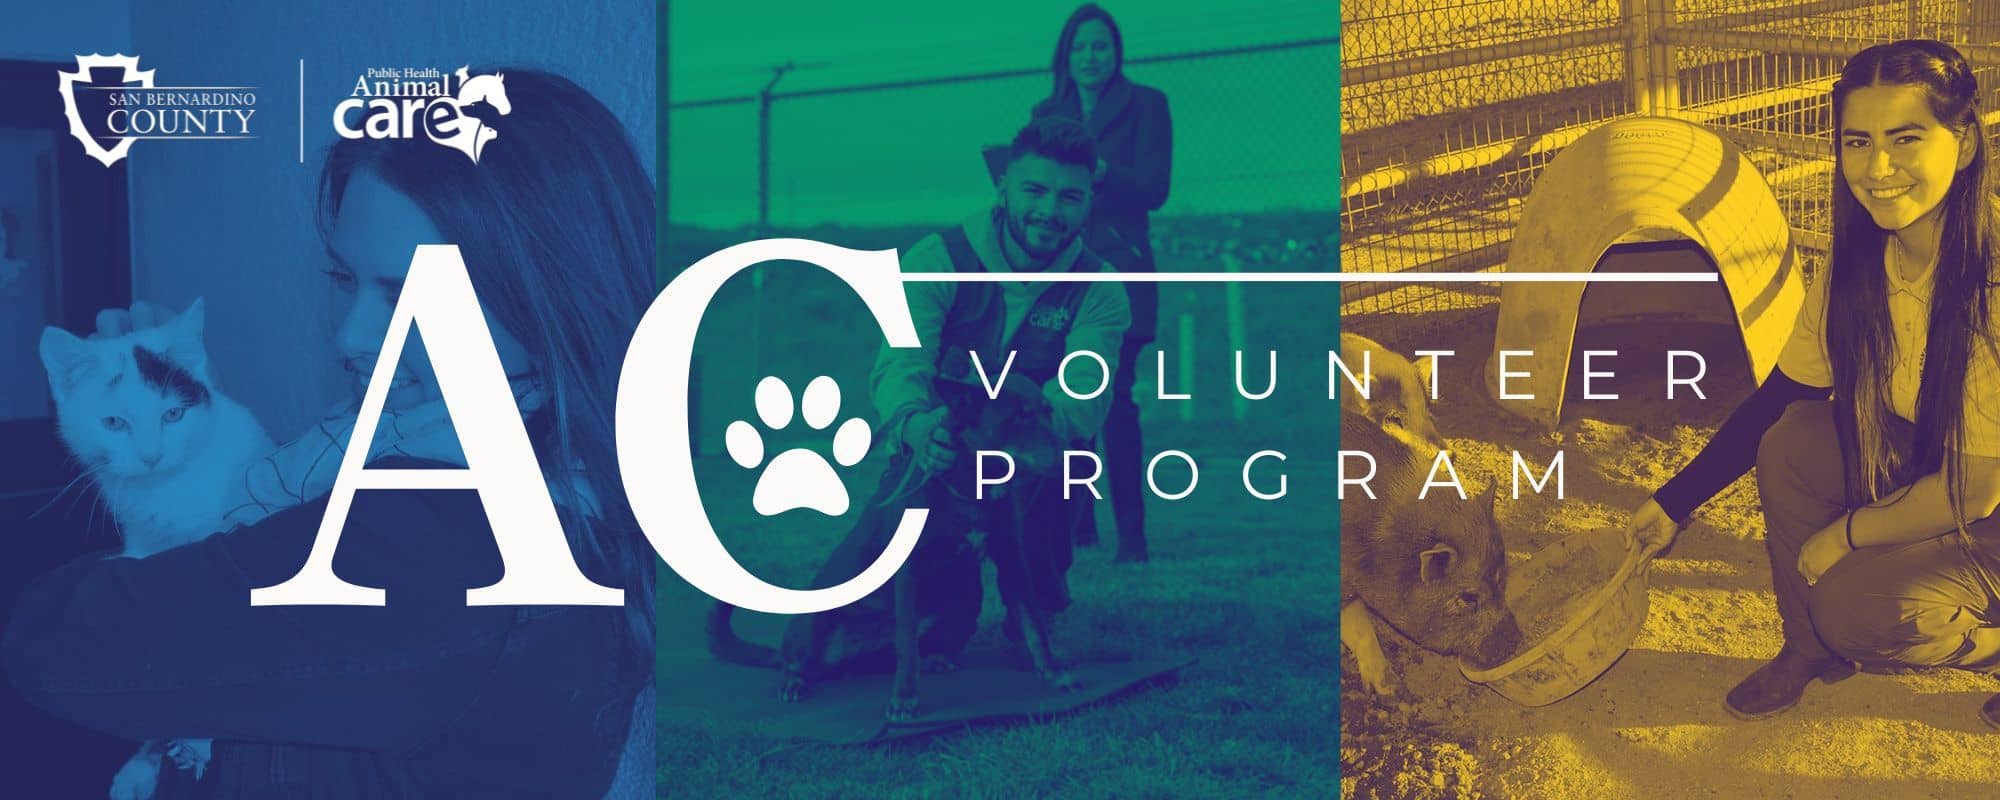 ac-volunteer-program-logo-500-500-px_original